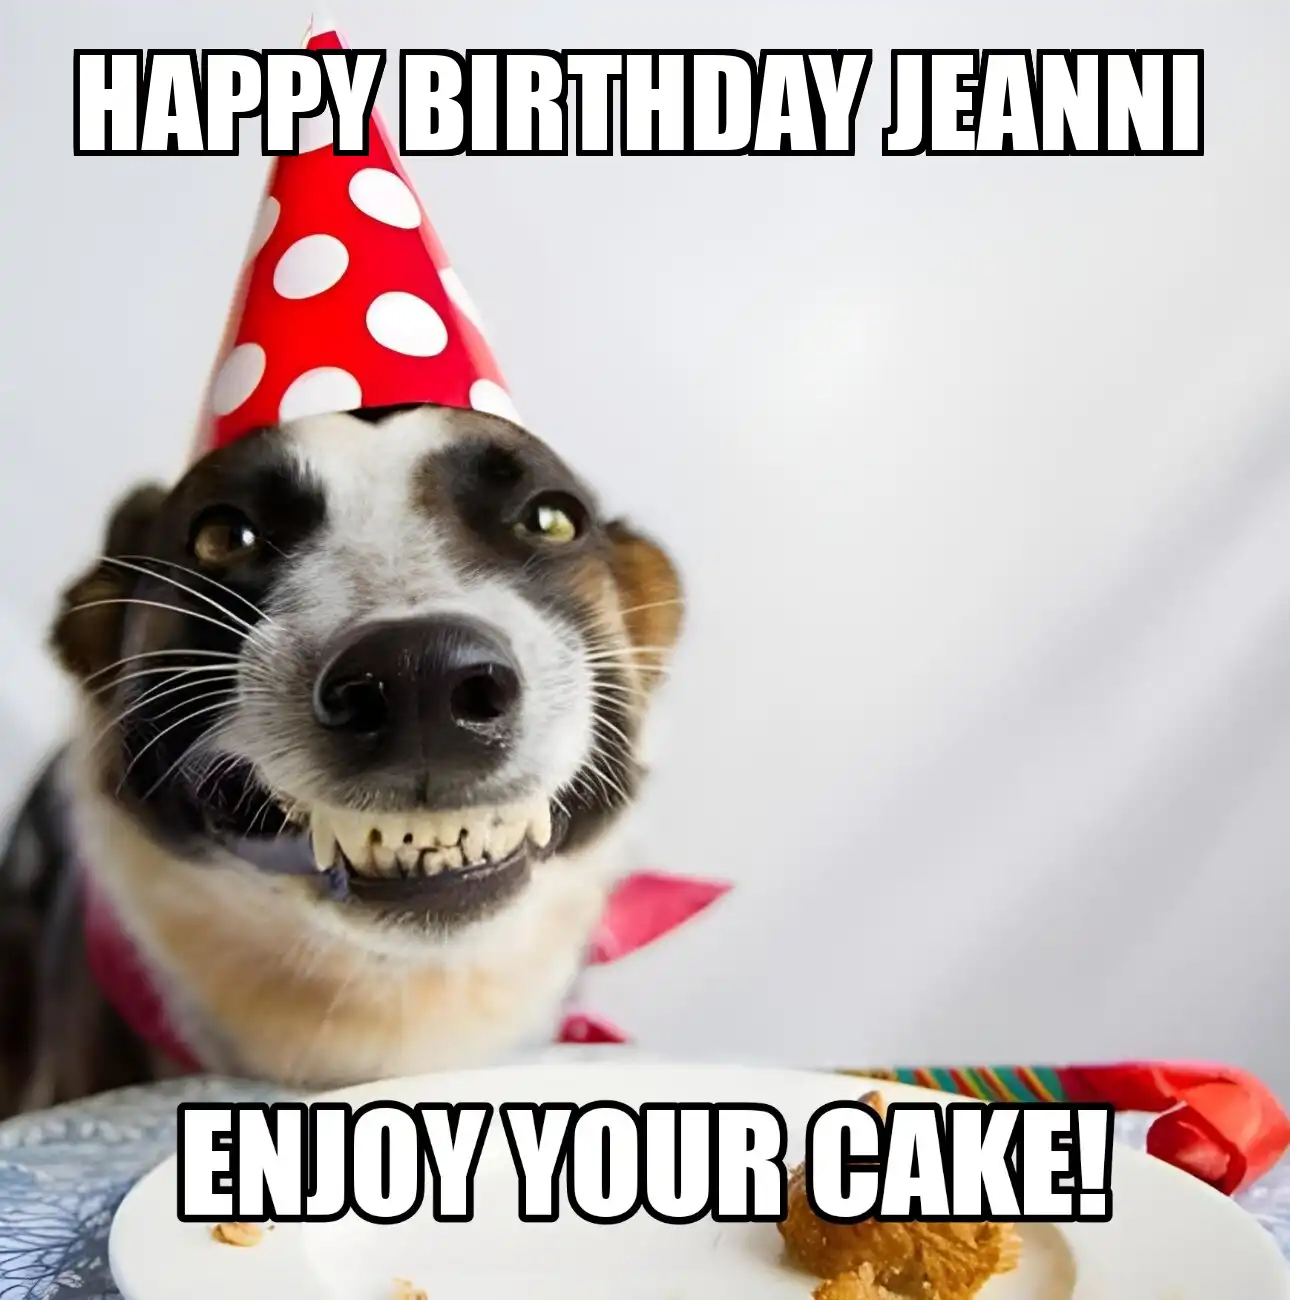 Happy Birthday Jeanni Enjoy Your Cake Dog Meme